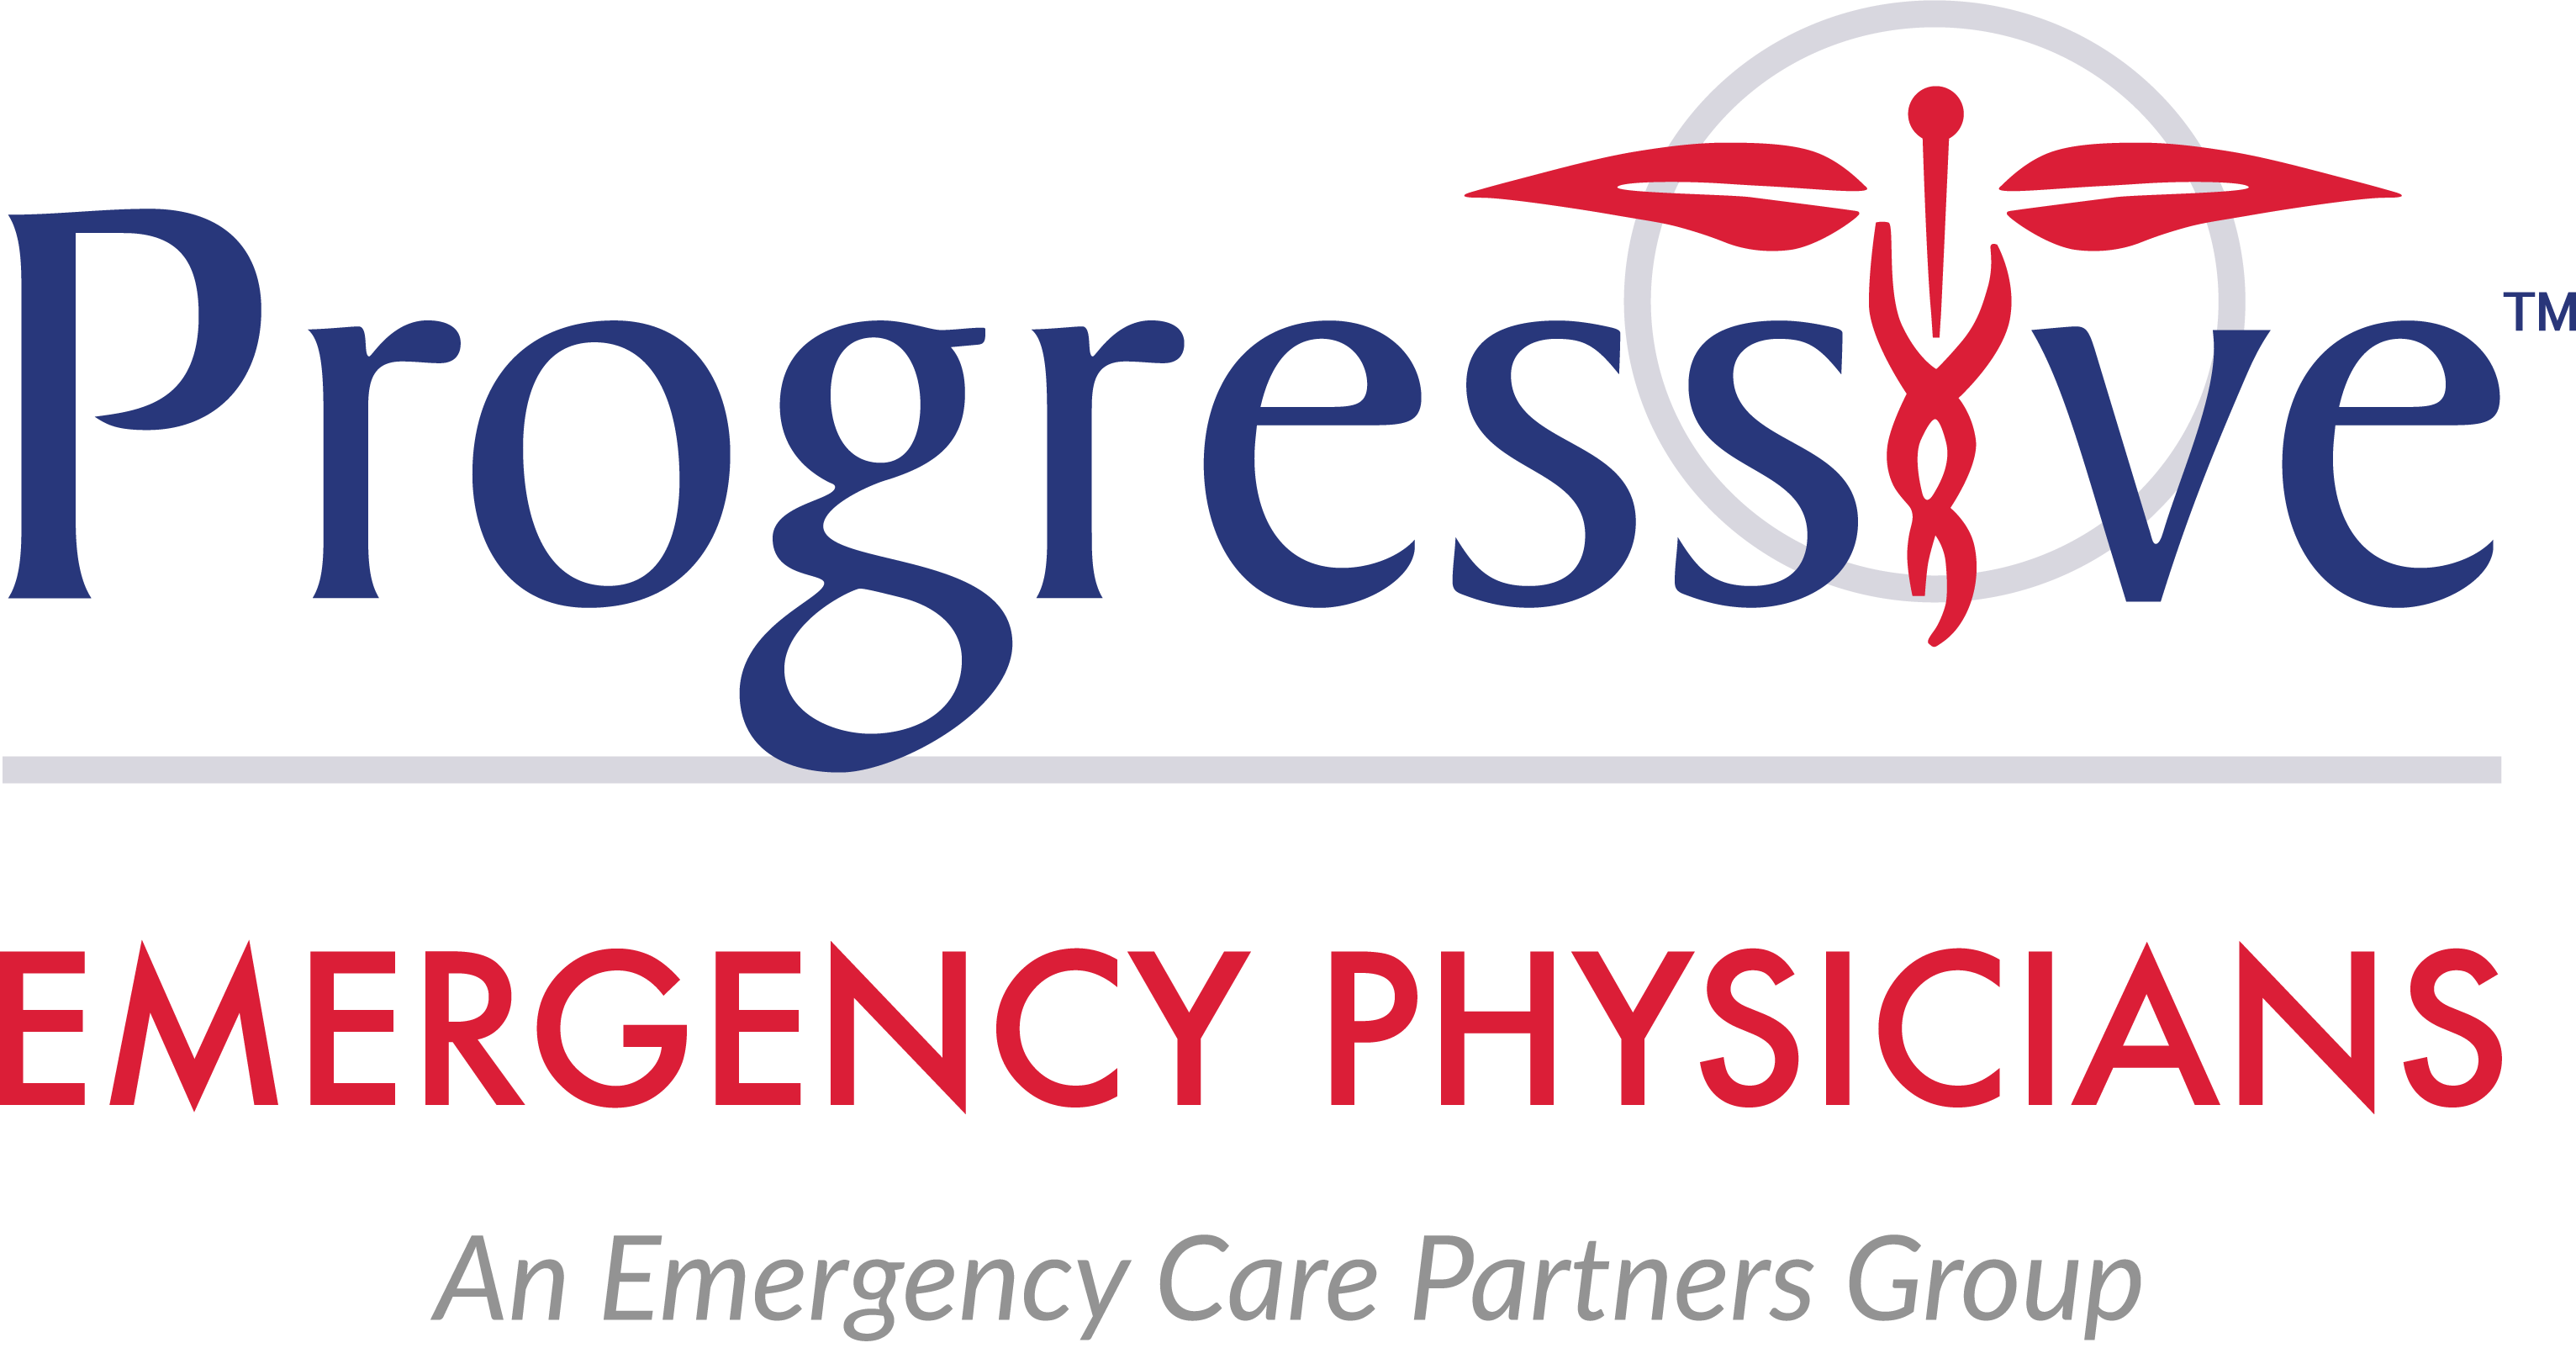 Progressive Emergency Physicians Employee LTC Insurance Program